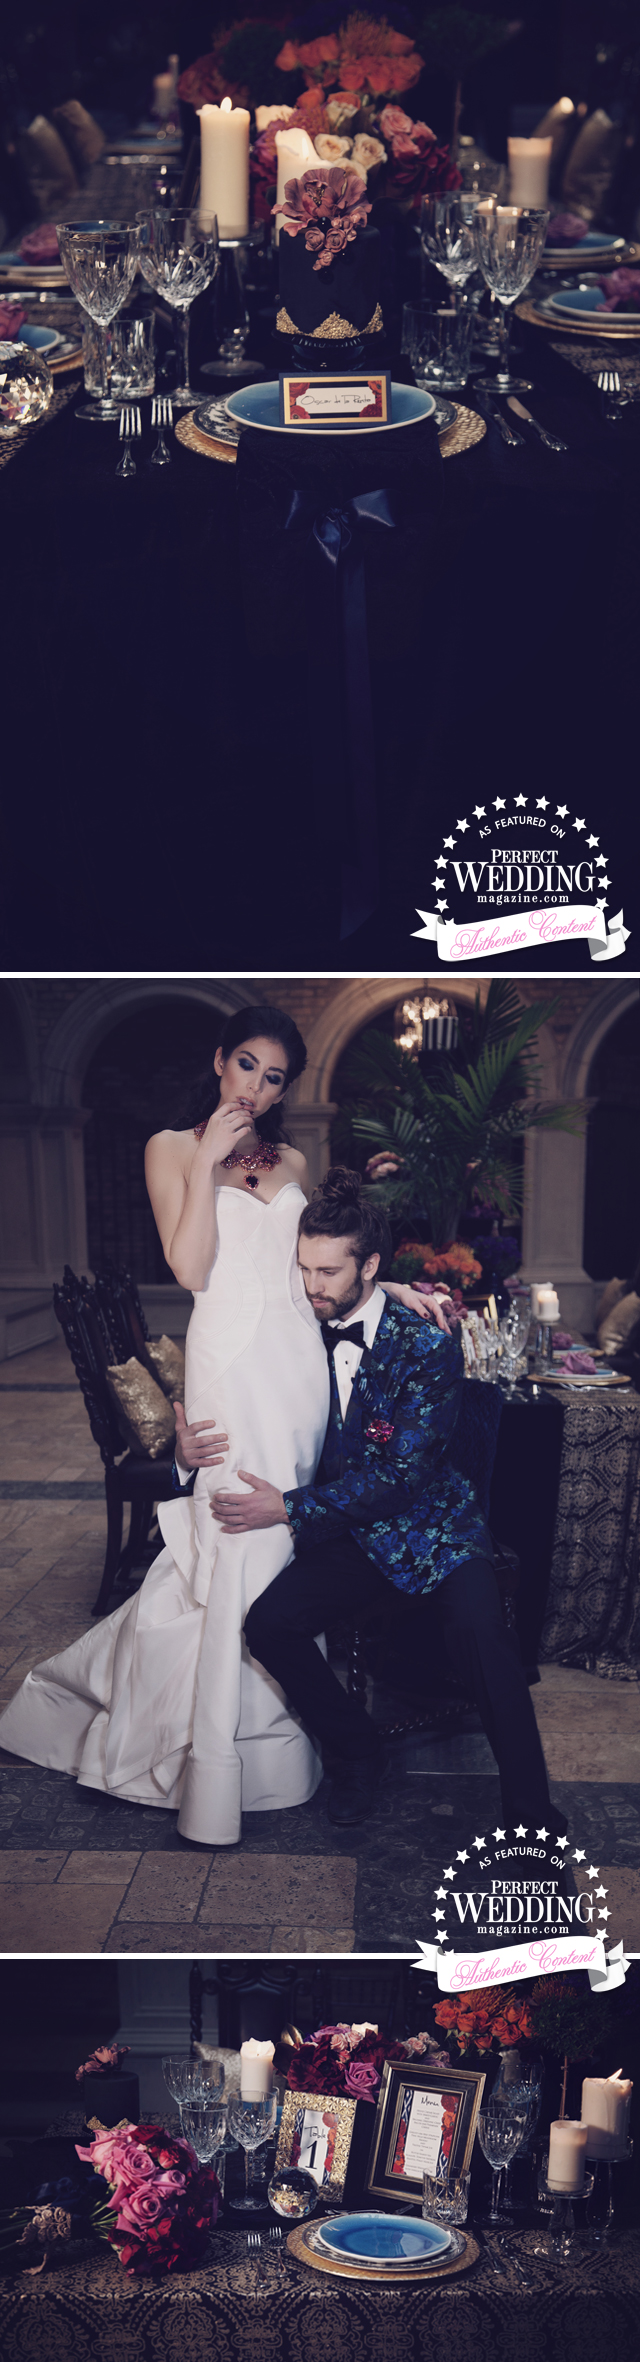 A Tribute to Style (Part 1), Oscar de la Renta, Oscar de la Renta Wedding Décor, Wedding Décor, Floral Trends, Weddings in Haciendas, Perfect Wedding Magazine Blog